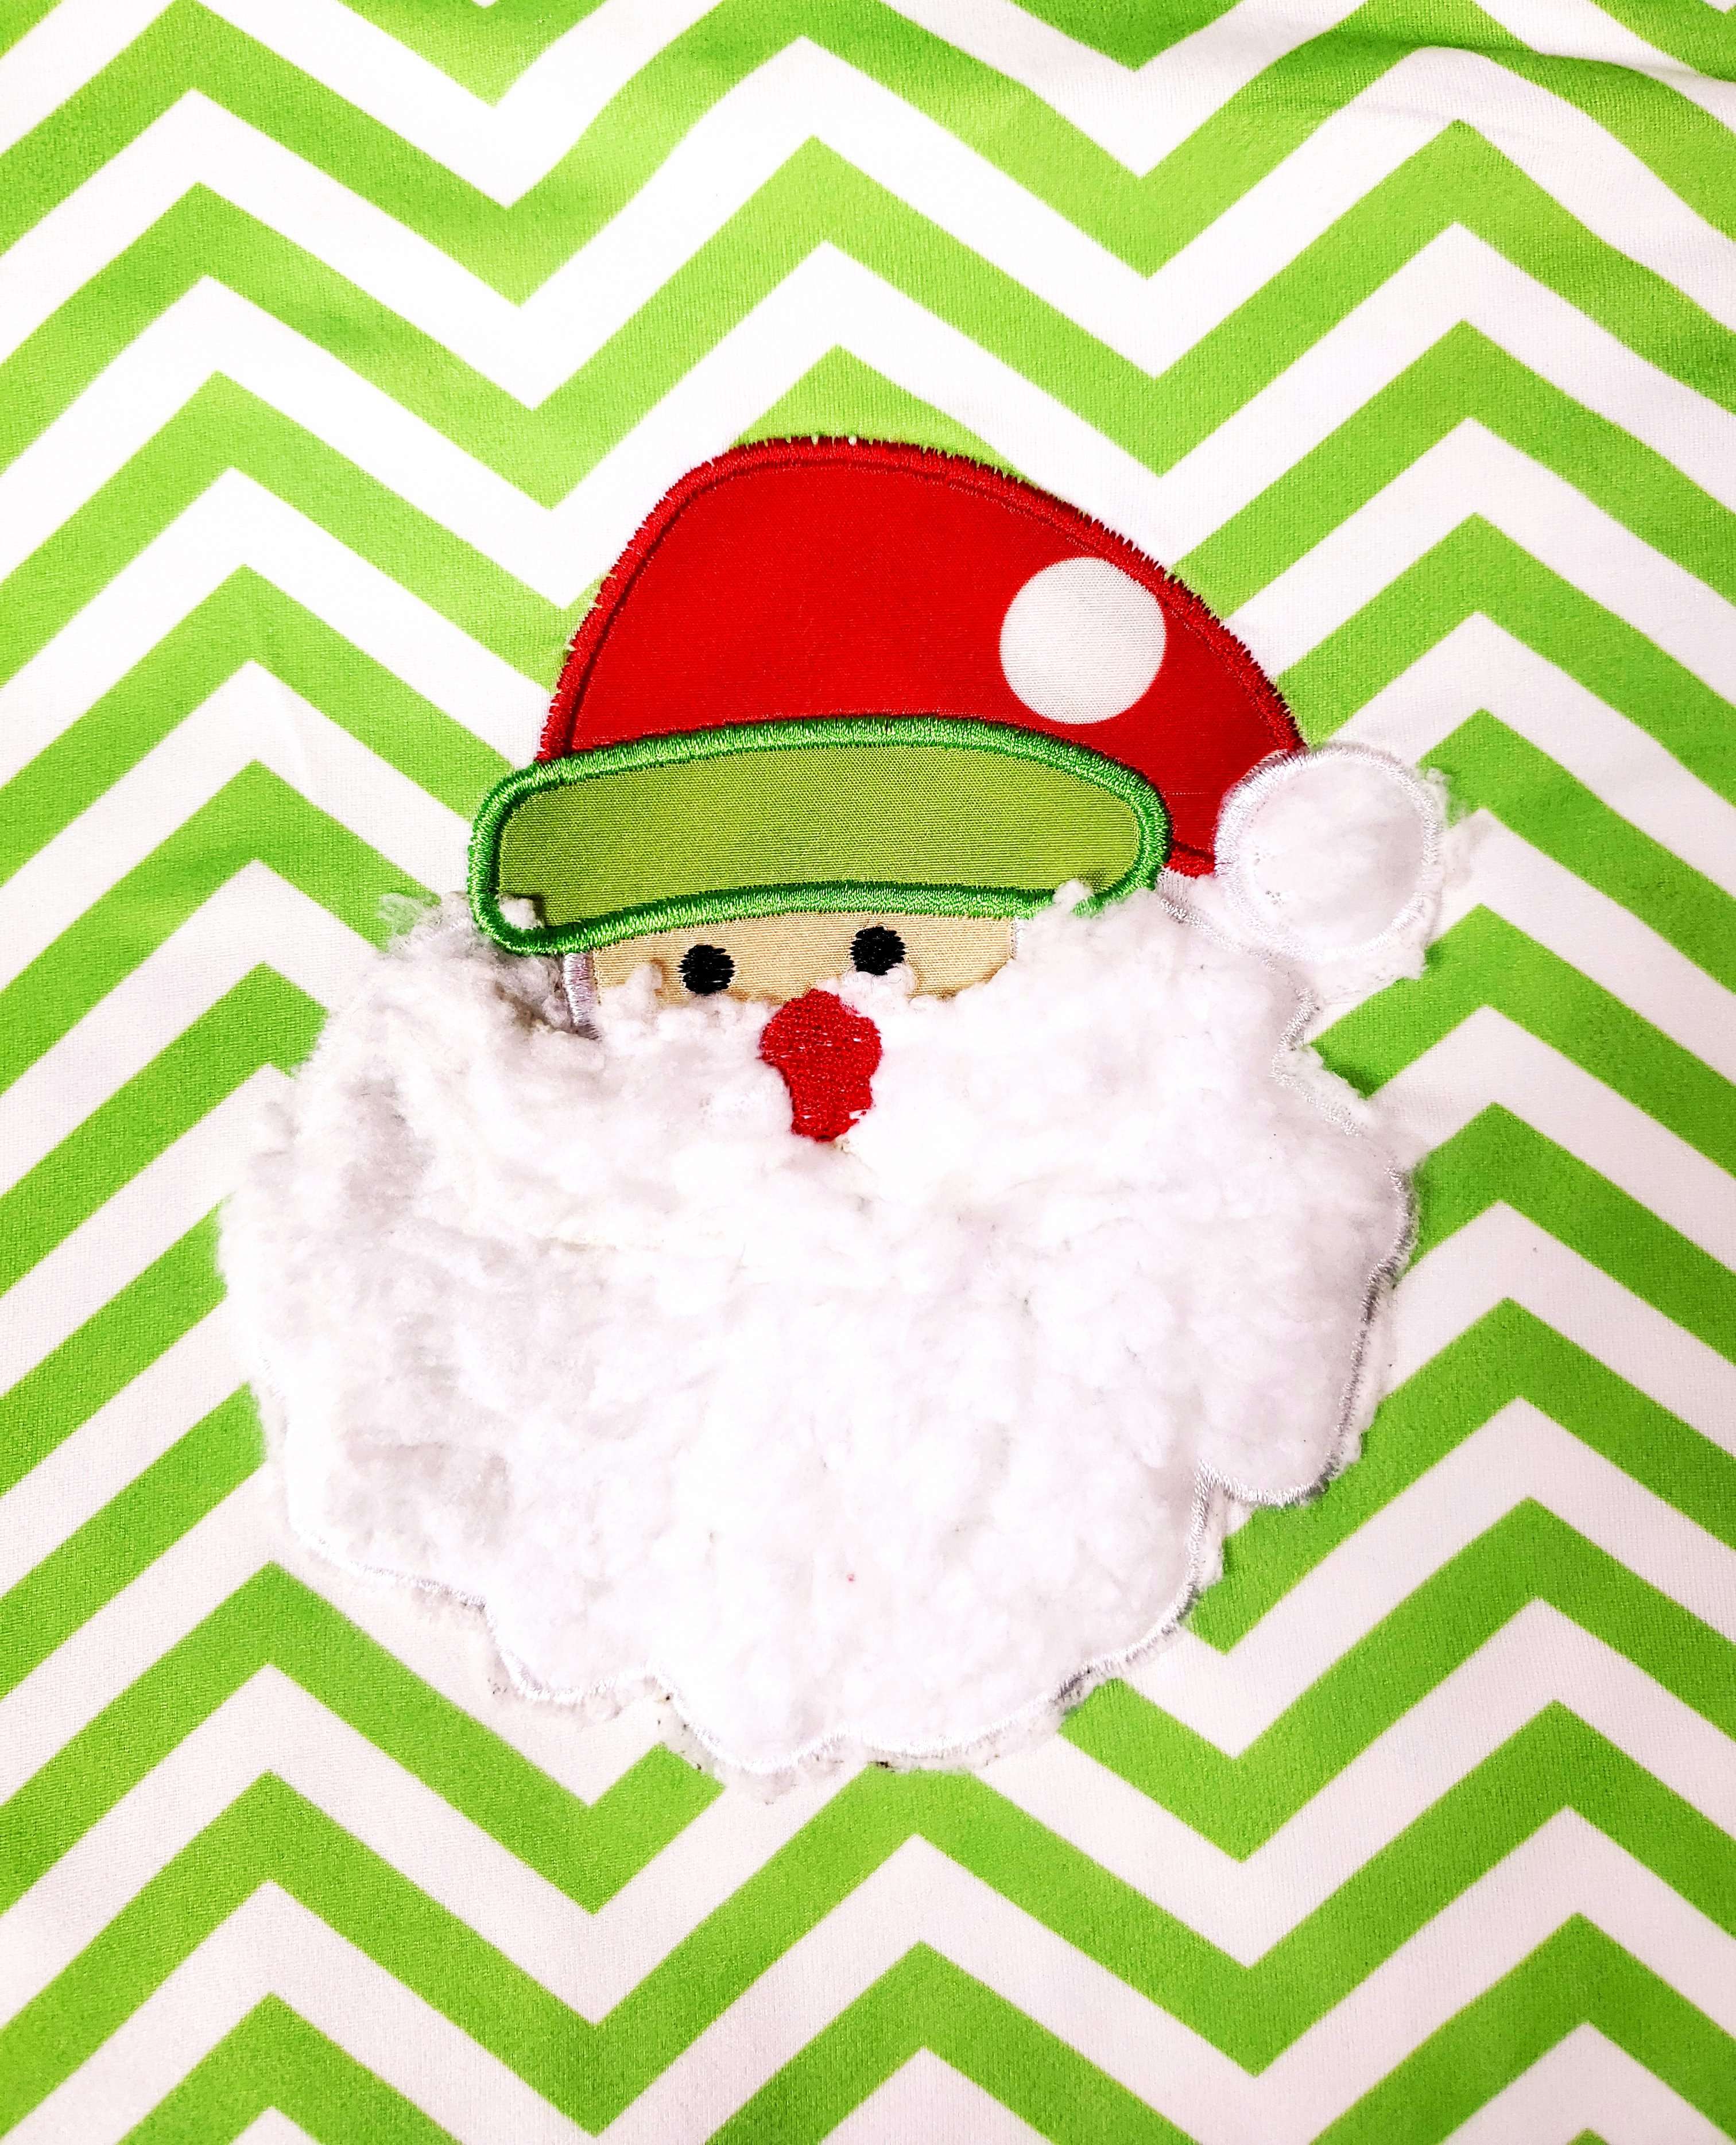 Angeline Kids:Baby Toddler Little Girls Christmas Santa Polka Dot Chevron Outfit - Lime Red